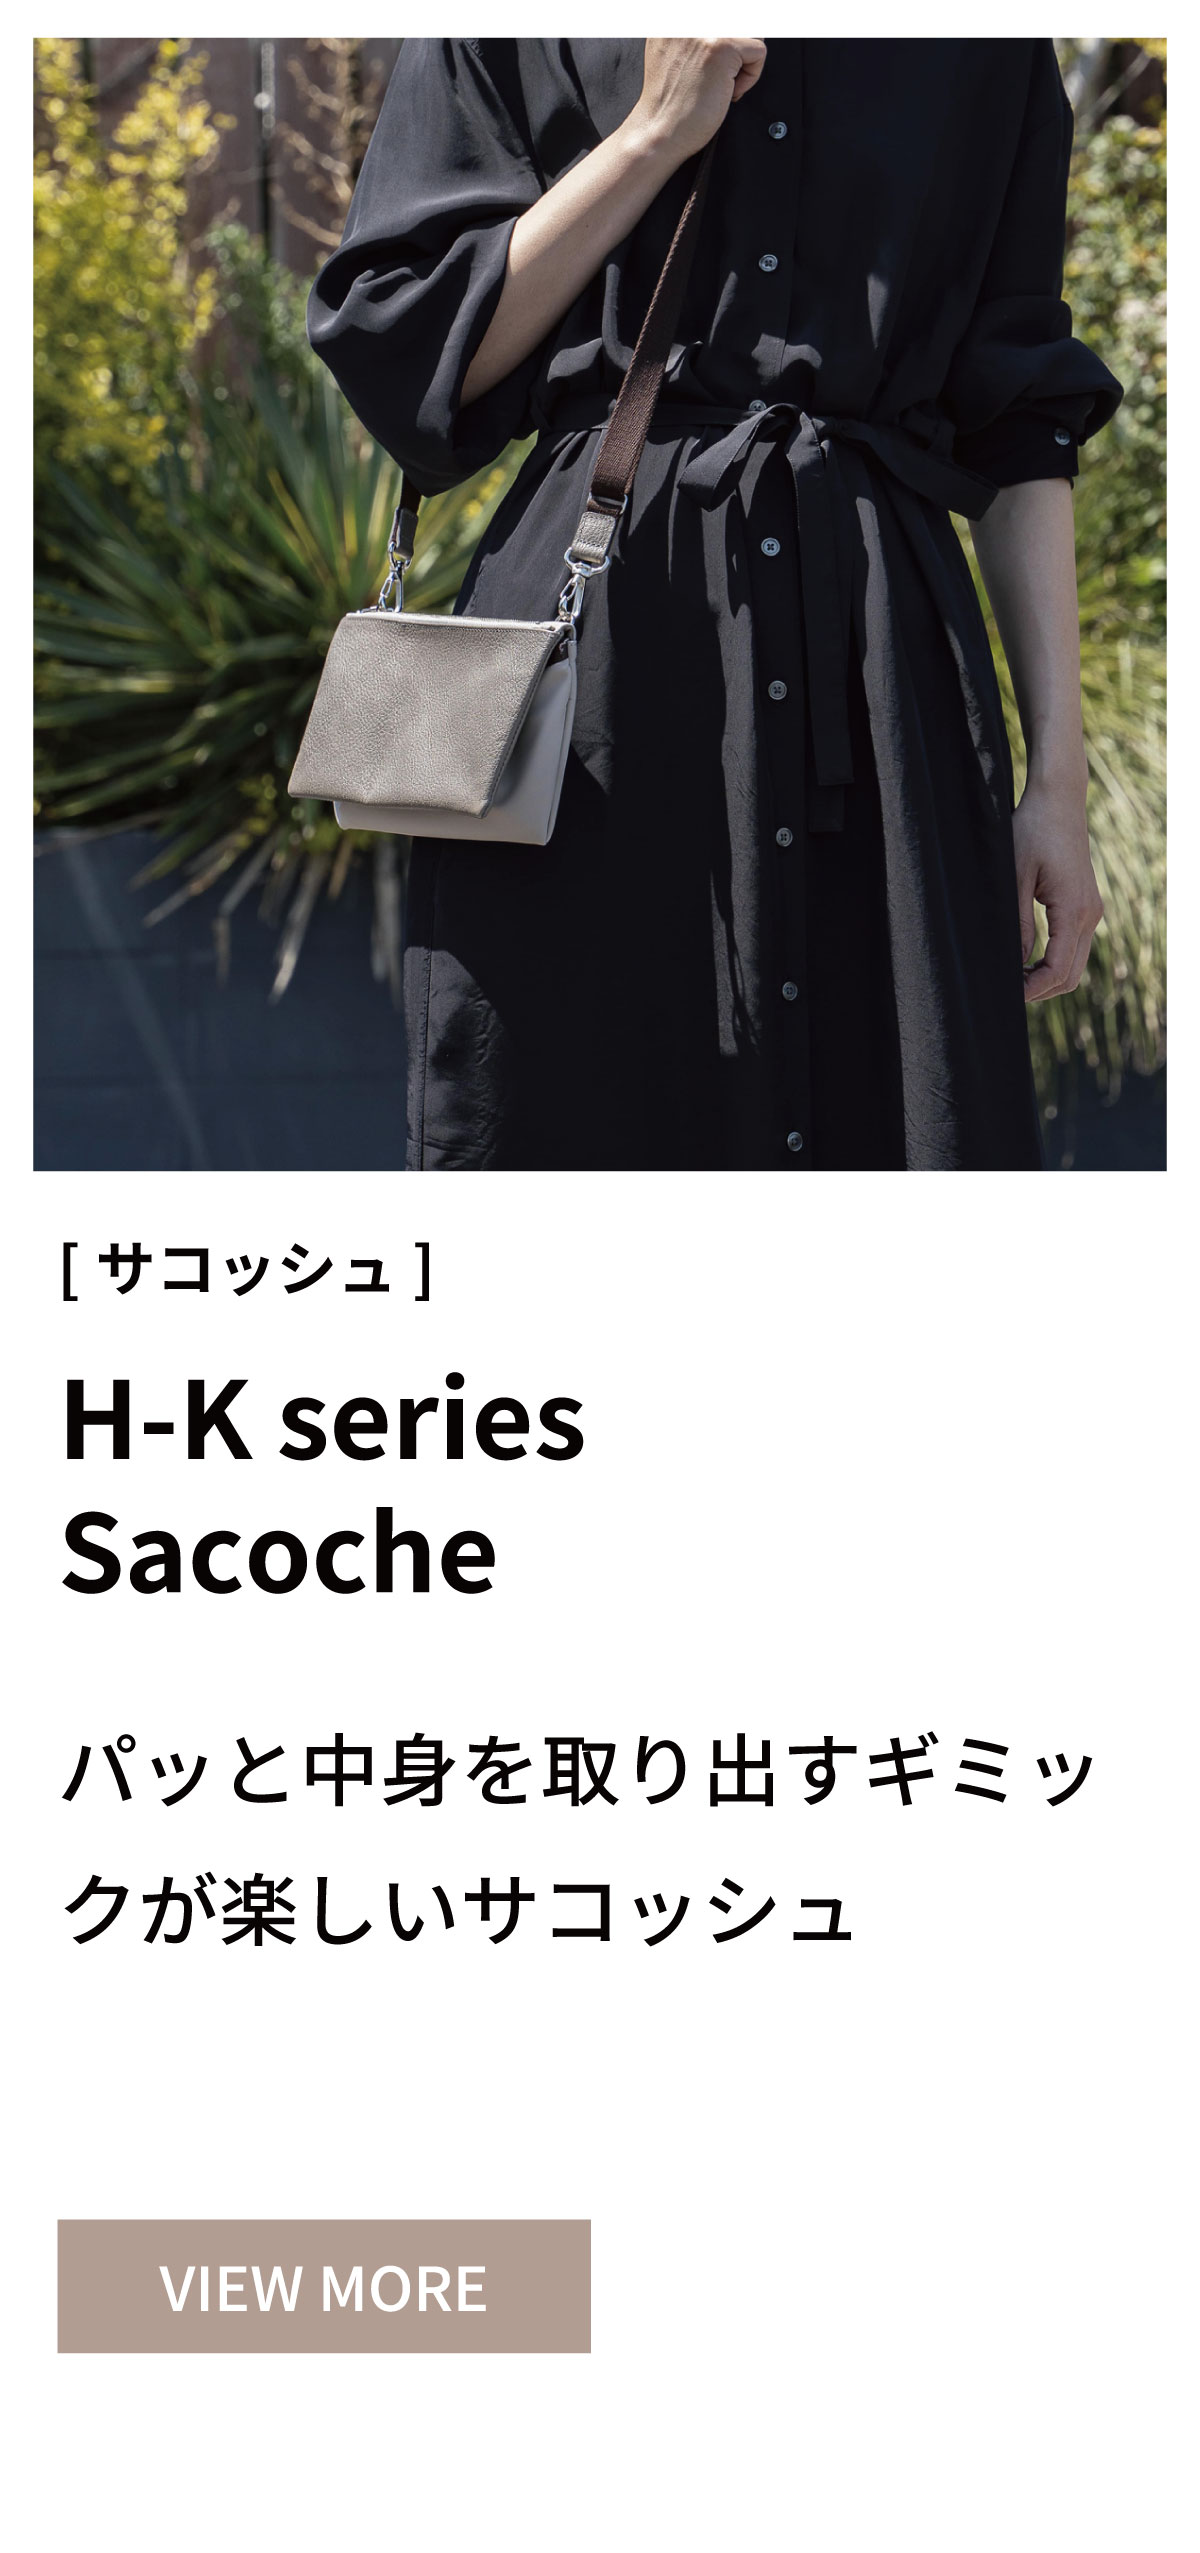 H-K series Sacoche